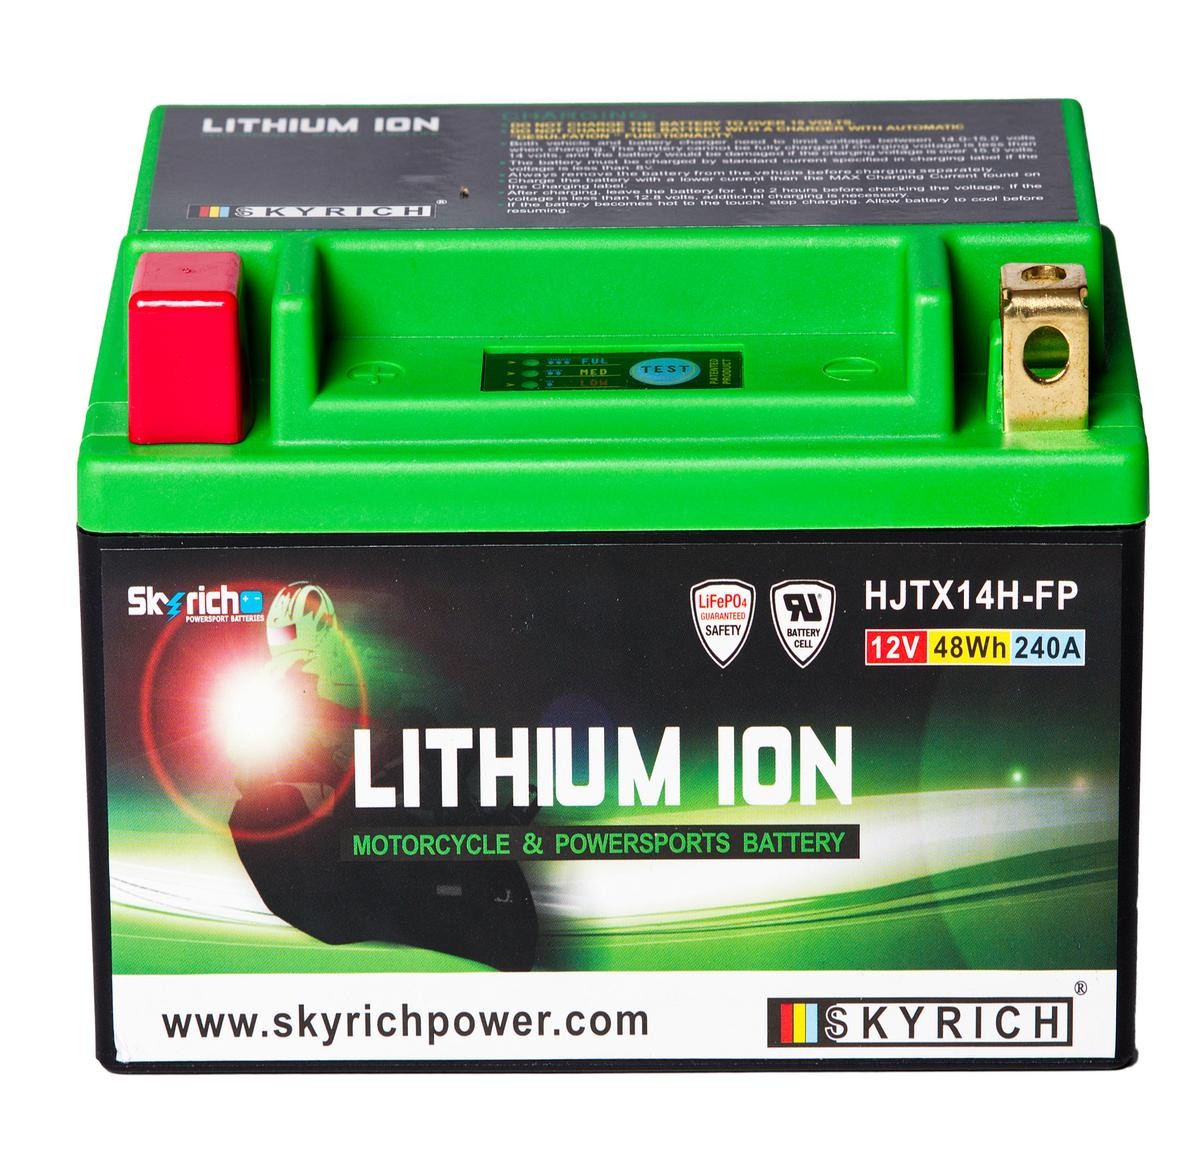 HOREX IMPERATOR Batterie 12V 4Ah 240A N Li-Ionen-Batterie SKYRICH LITHIUM ION HJTX14H-FP